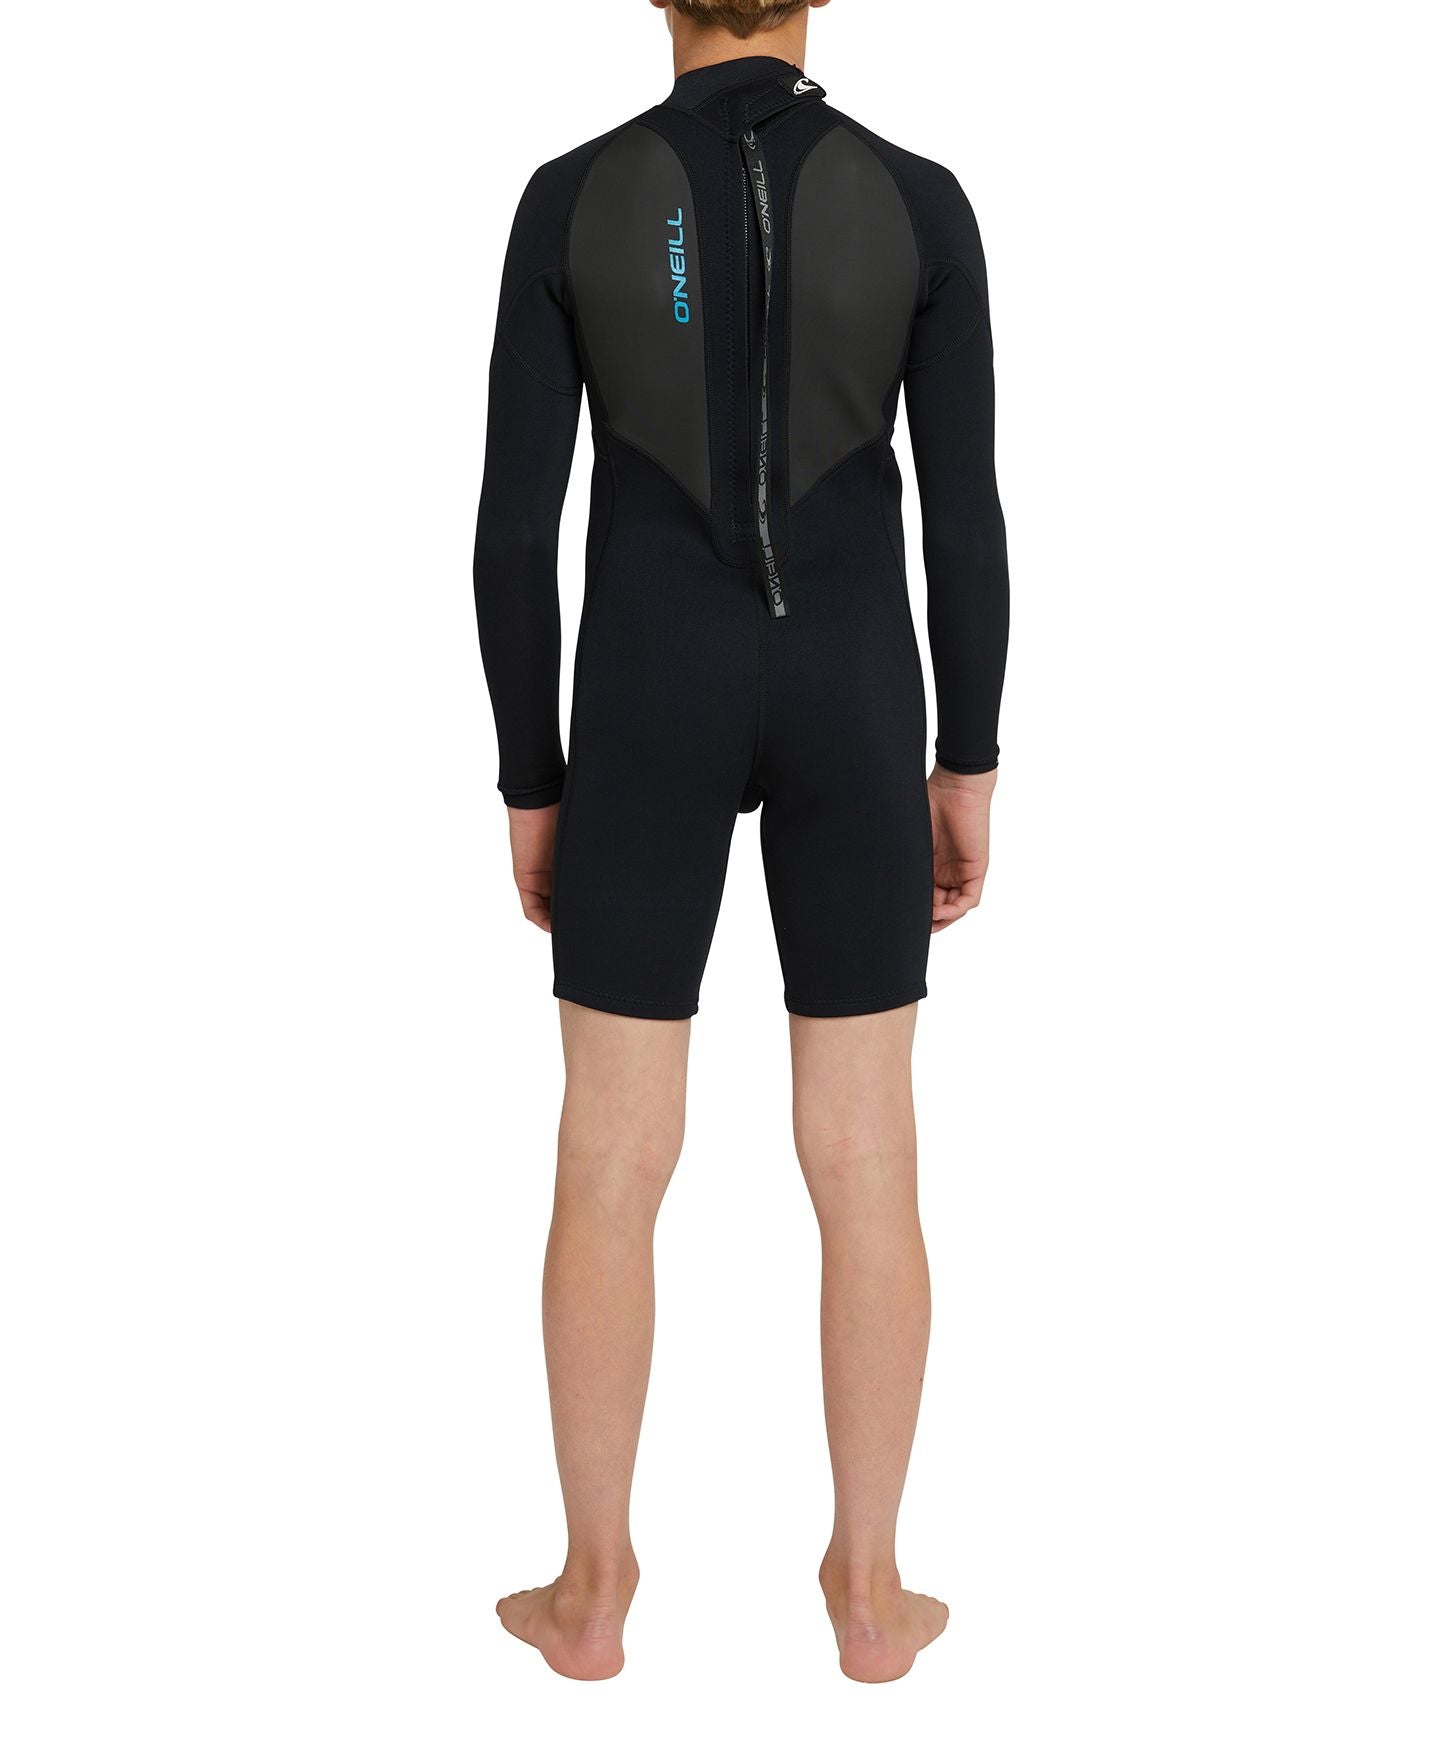 Boy's Reactor 2mm Long Sleeve Spring Suit BZ Wetsuit - Black